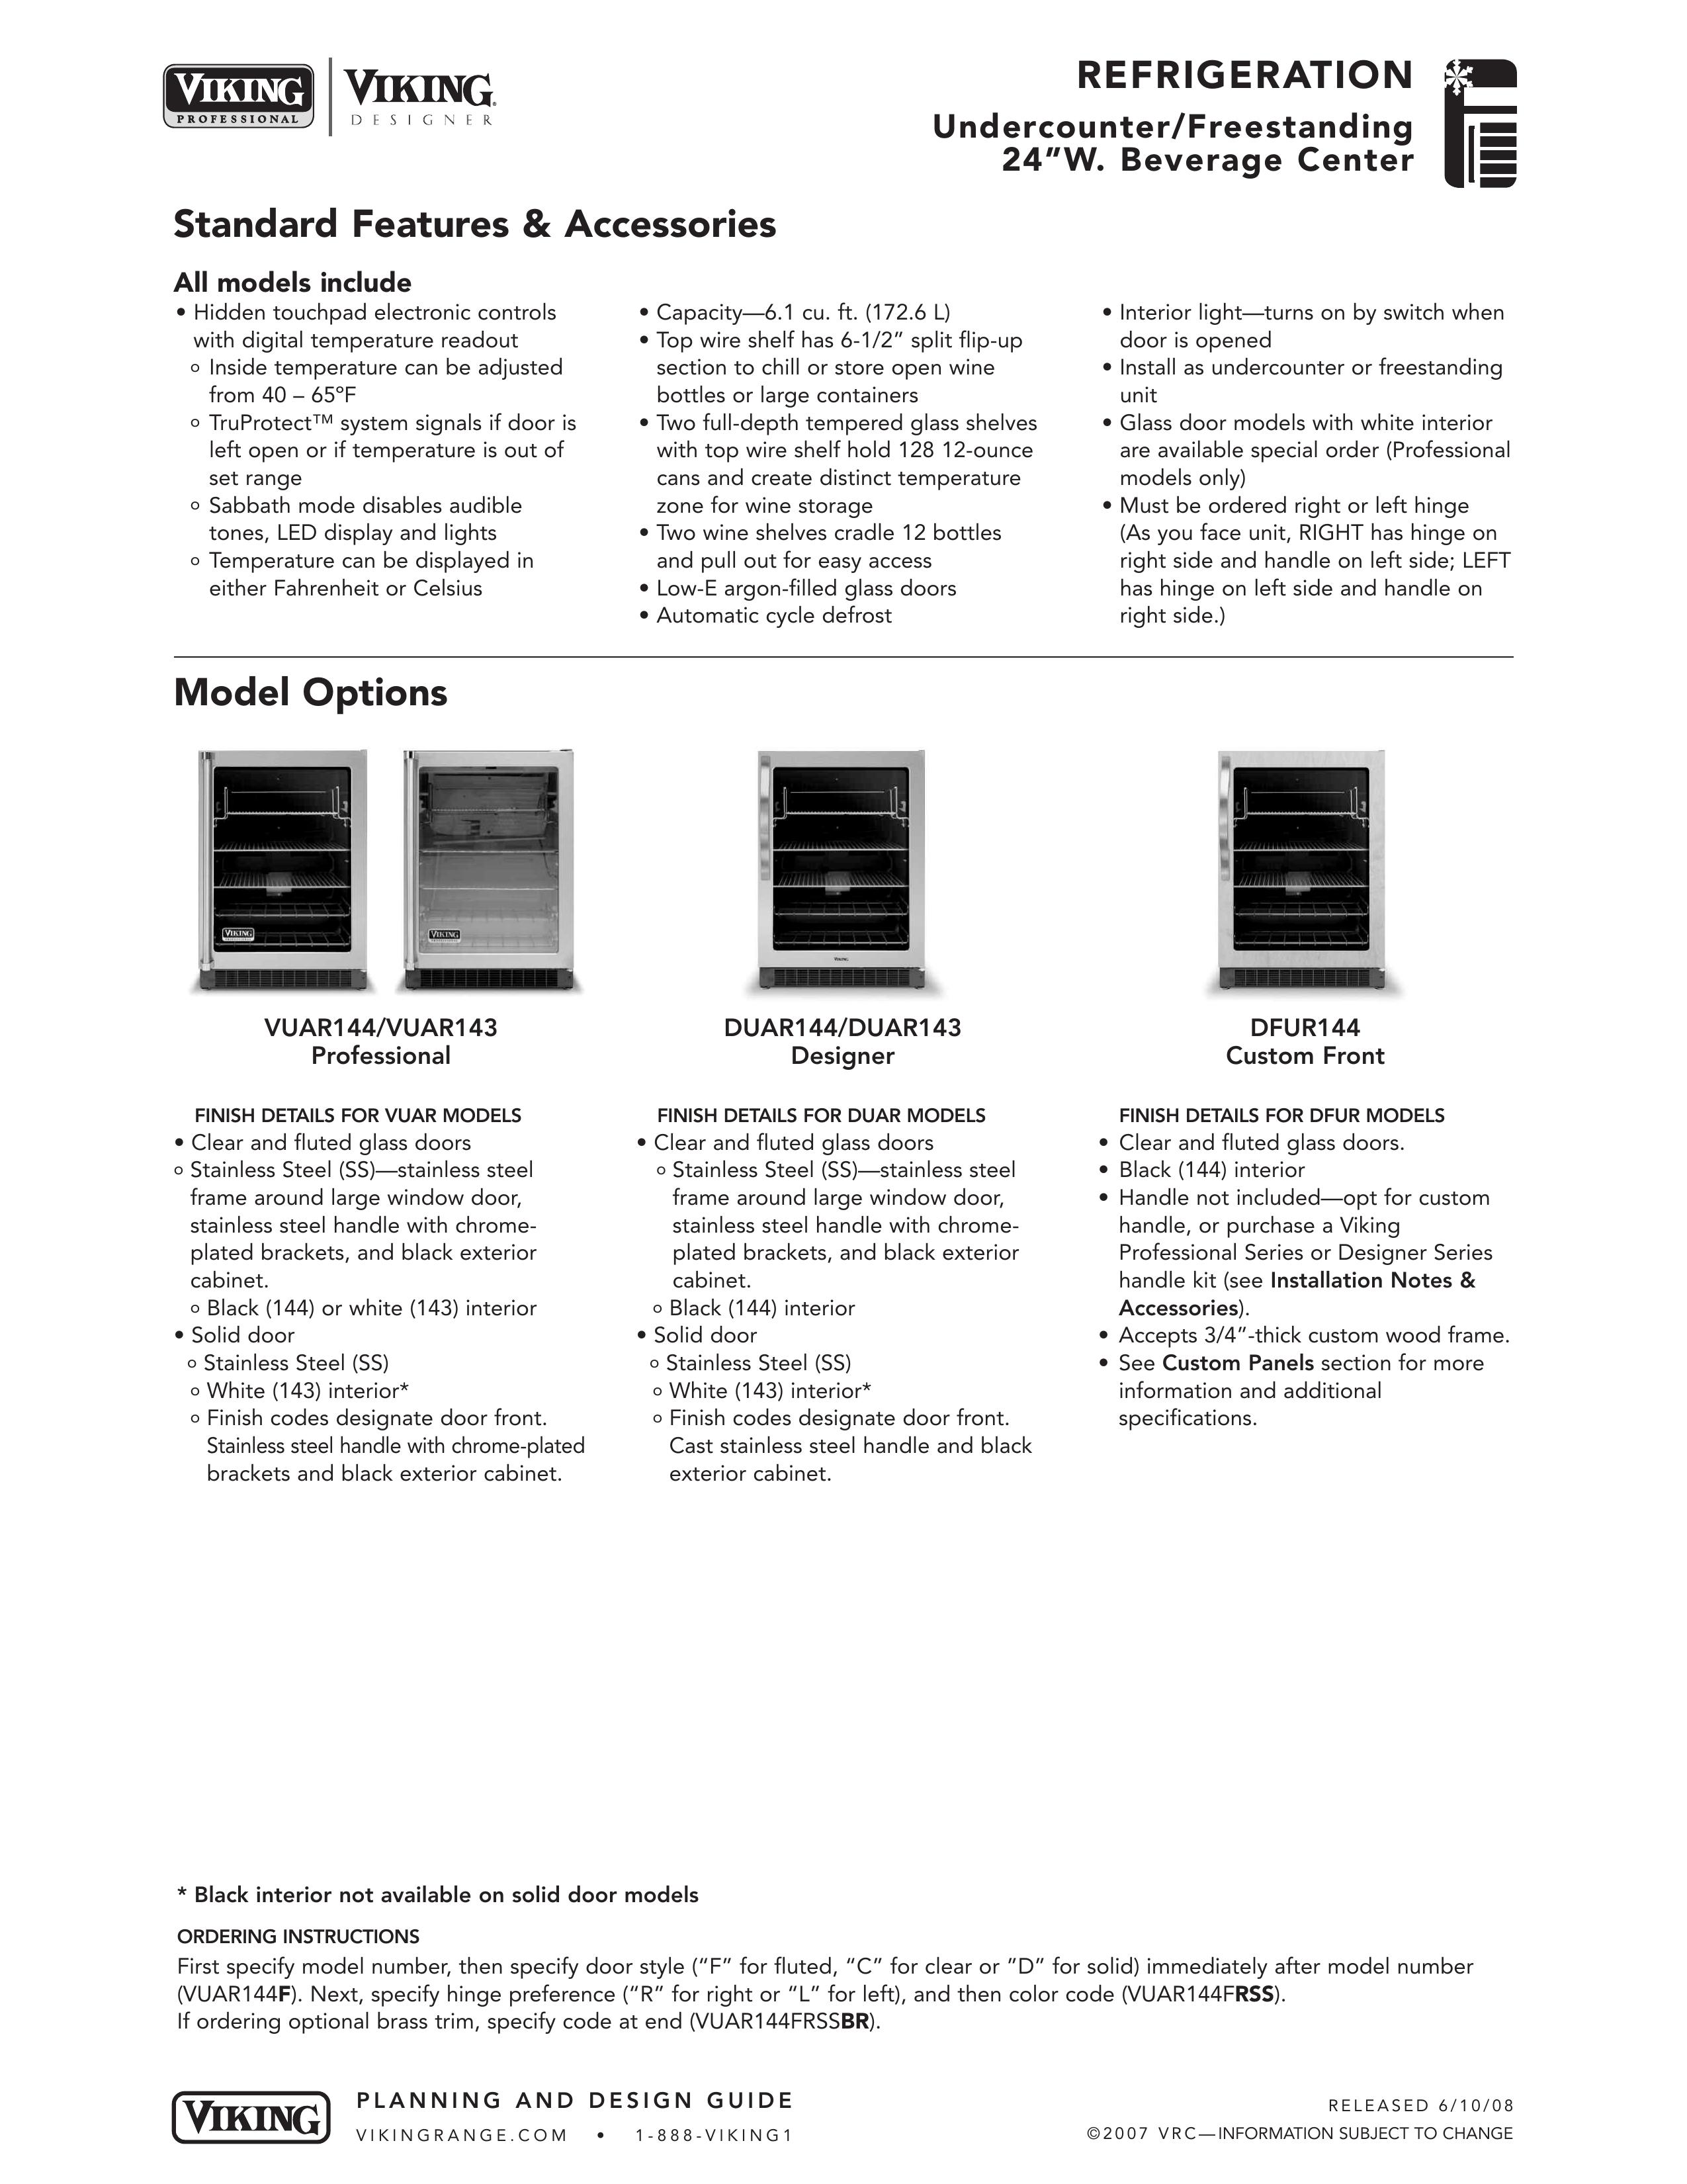 Viking DUAR144/DUAR143 Refrigerator User Manual